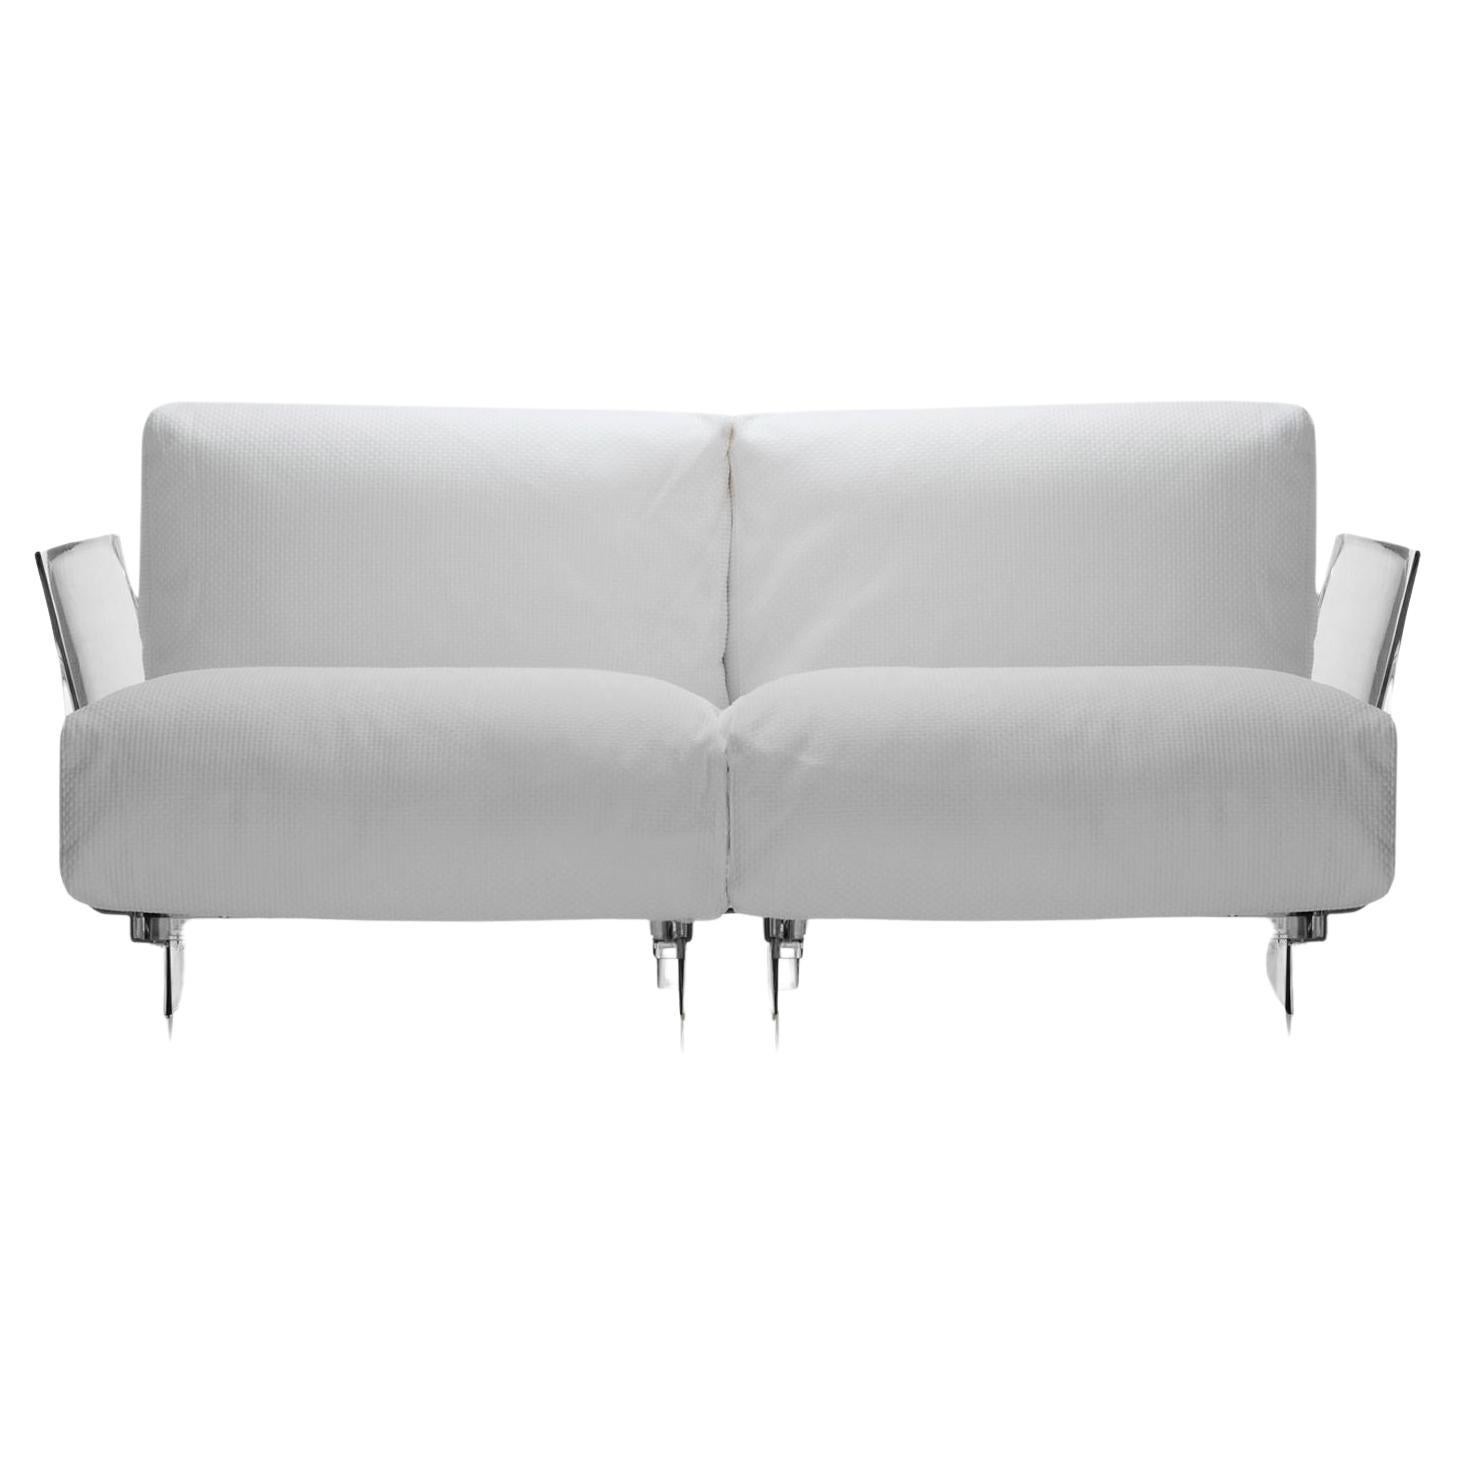 Kartell Pop Outdoor Sofa in Ikon White by Piero Lissoni